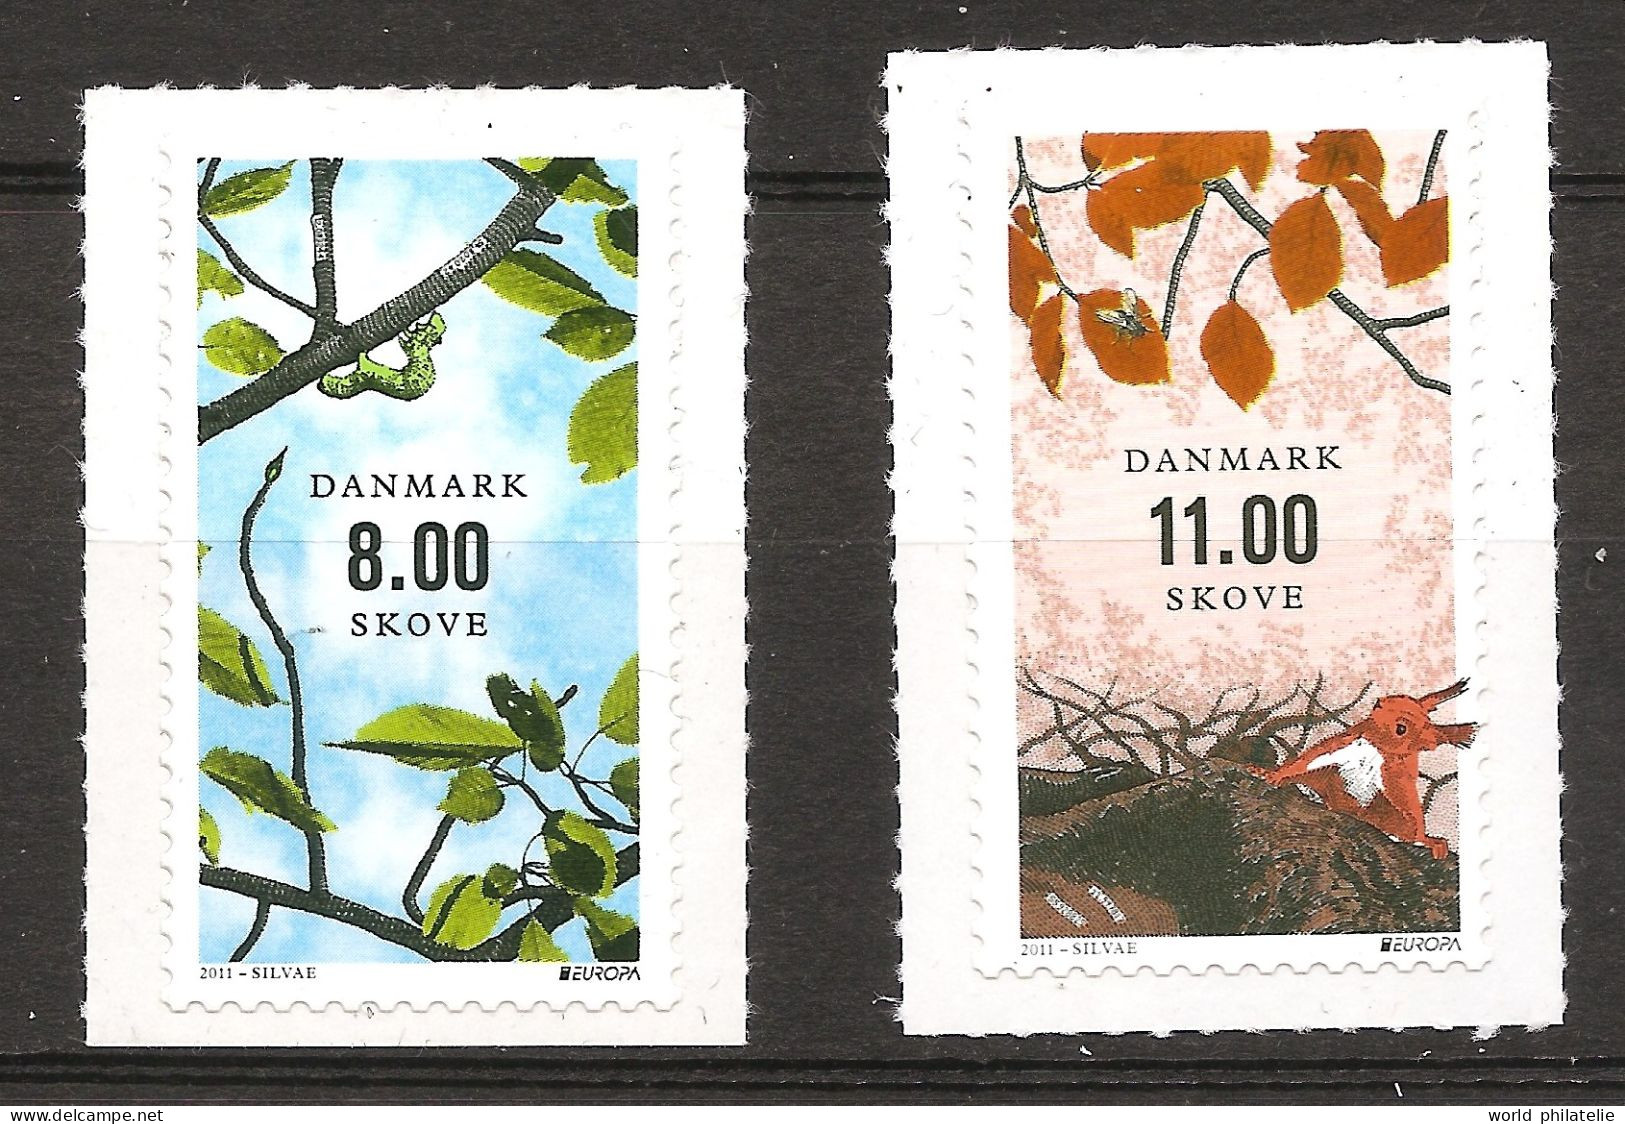 Danemark Danmark 2011 N° 1631 / 2 ** Europa, Emission Conjointe, Forêt, Arpenteuse, Geometridae, Ecureuil, Papillon - Unused Stamps